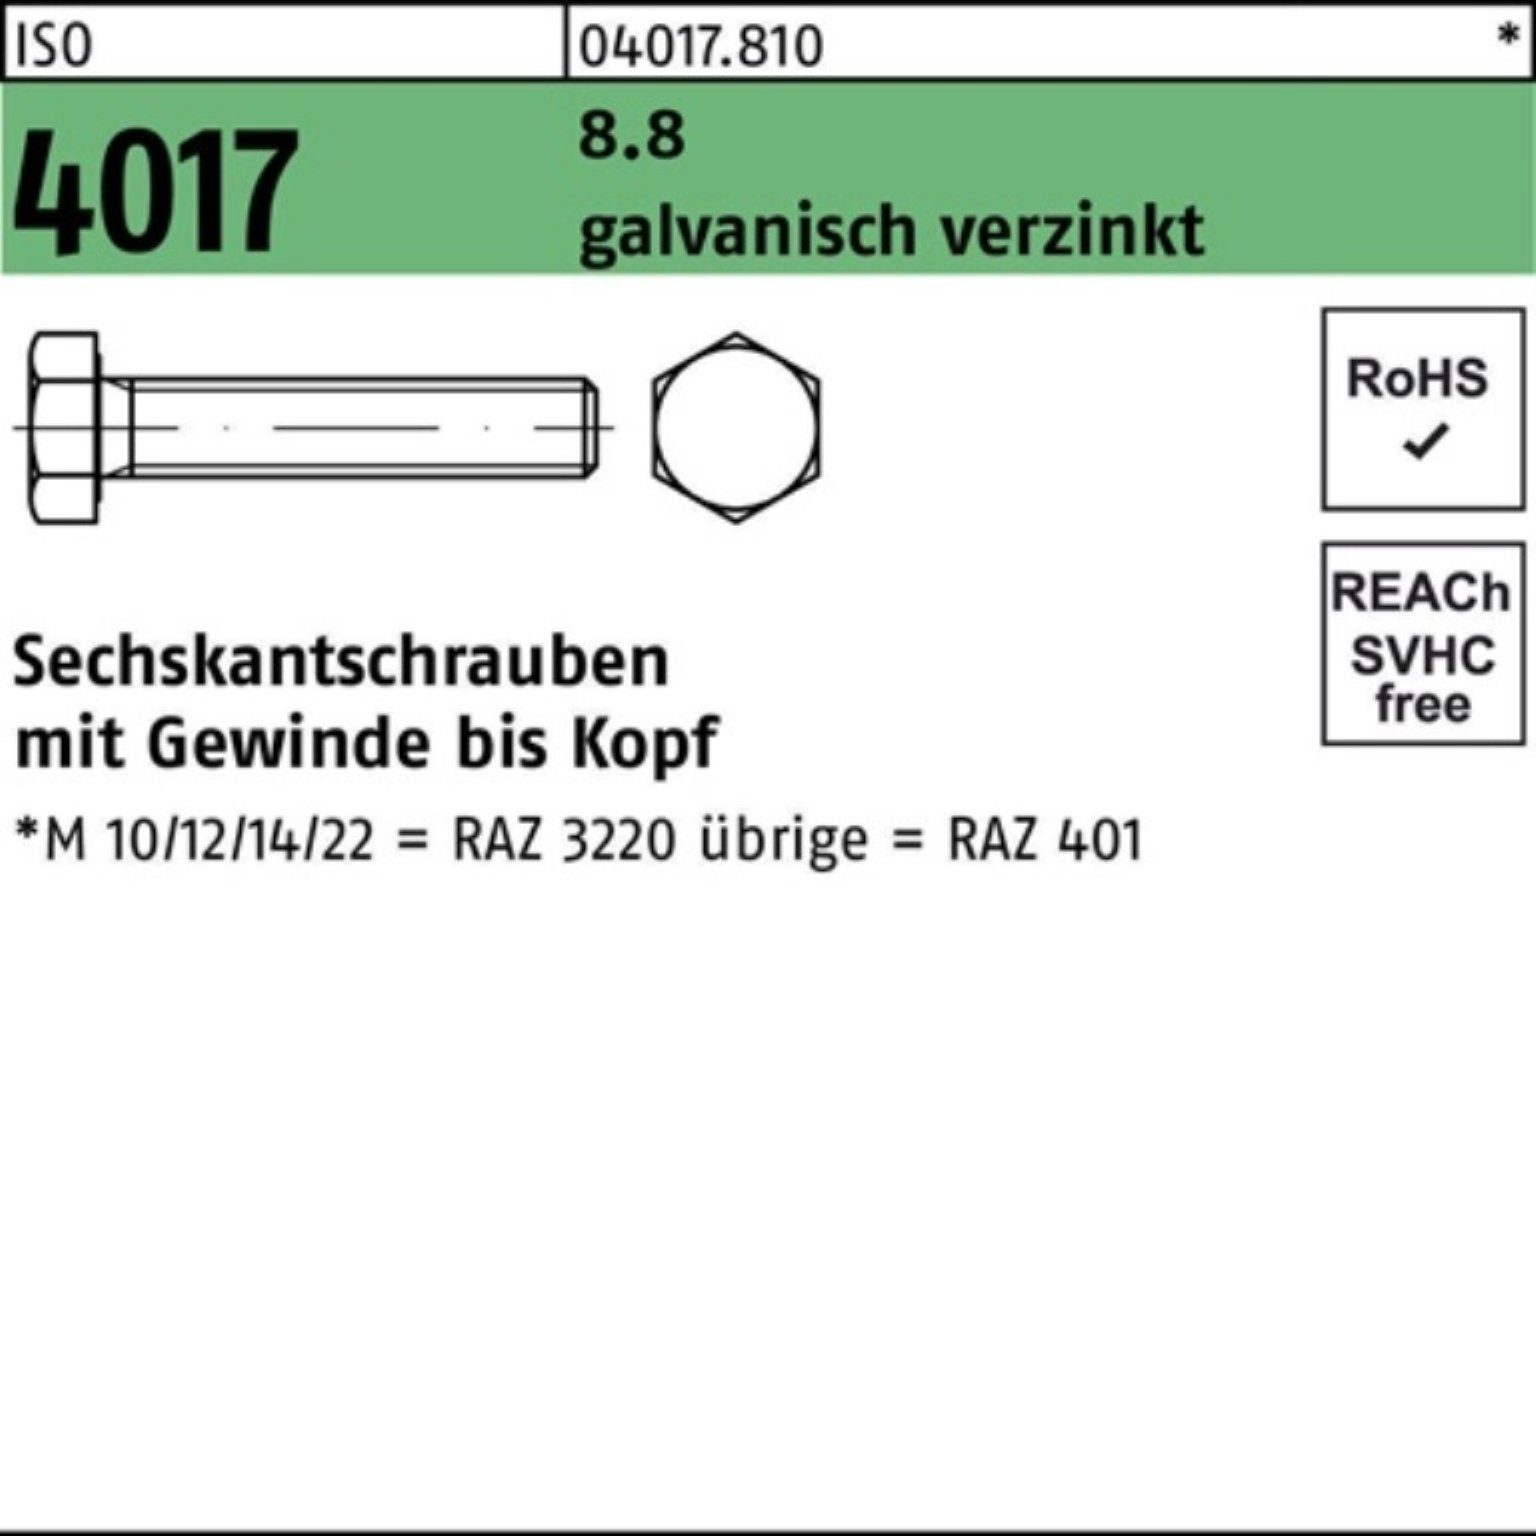 Bufab Sechskantschraube 100er galv.verz. 200 4017 M30x Pack St 1 ISO VG Sechskantschraube 8.8